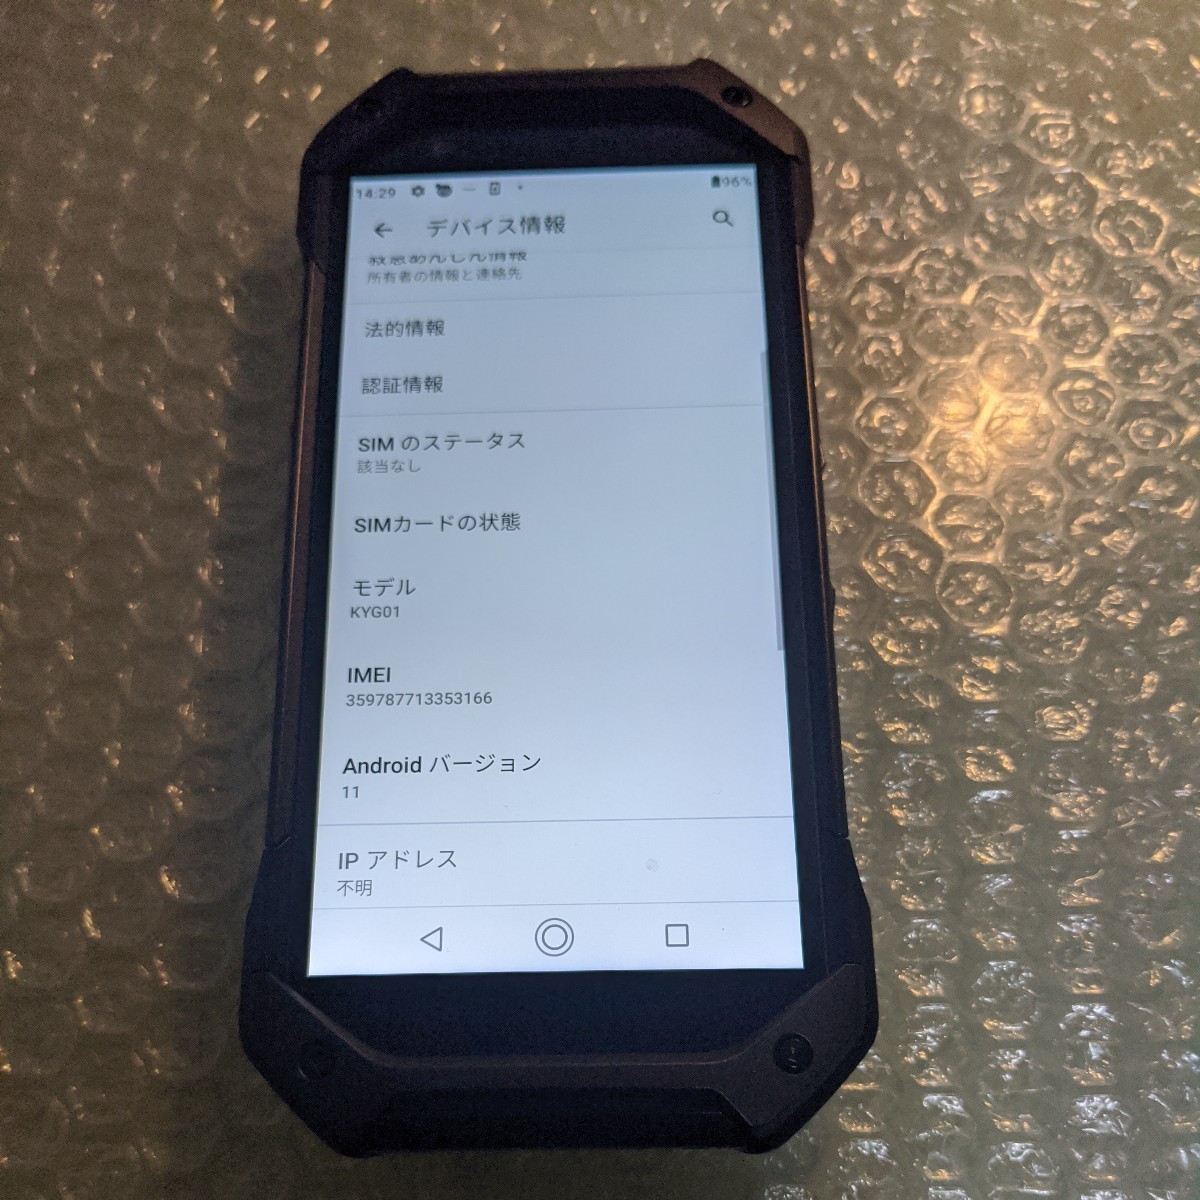 simフリー 京セラ au TORQUE 5G KYG01 ブラック(Android)｜売買された 